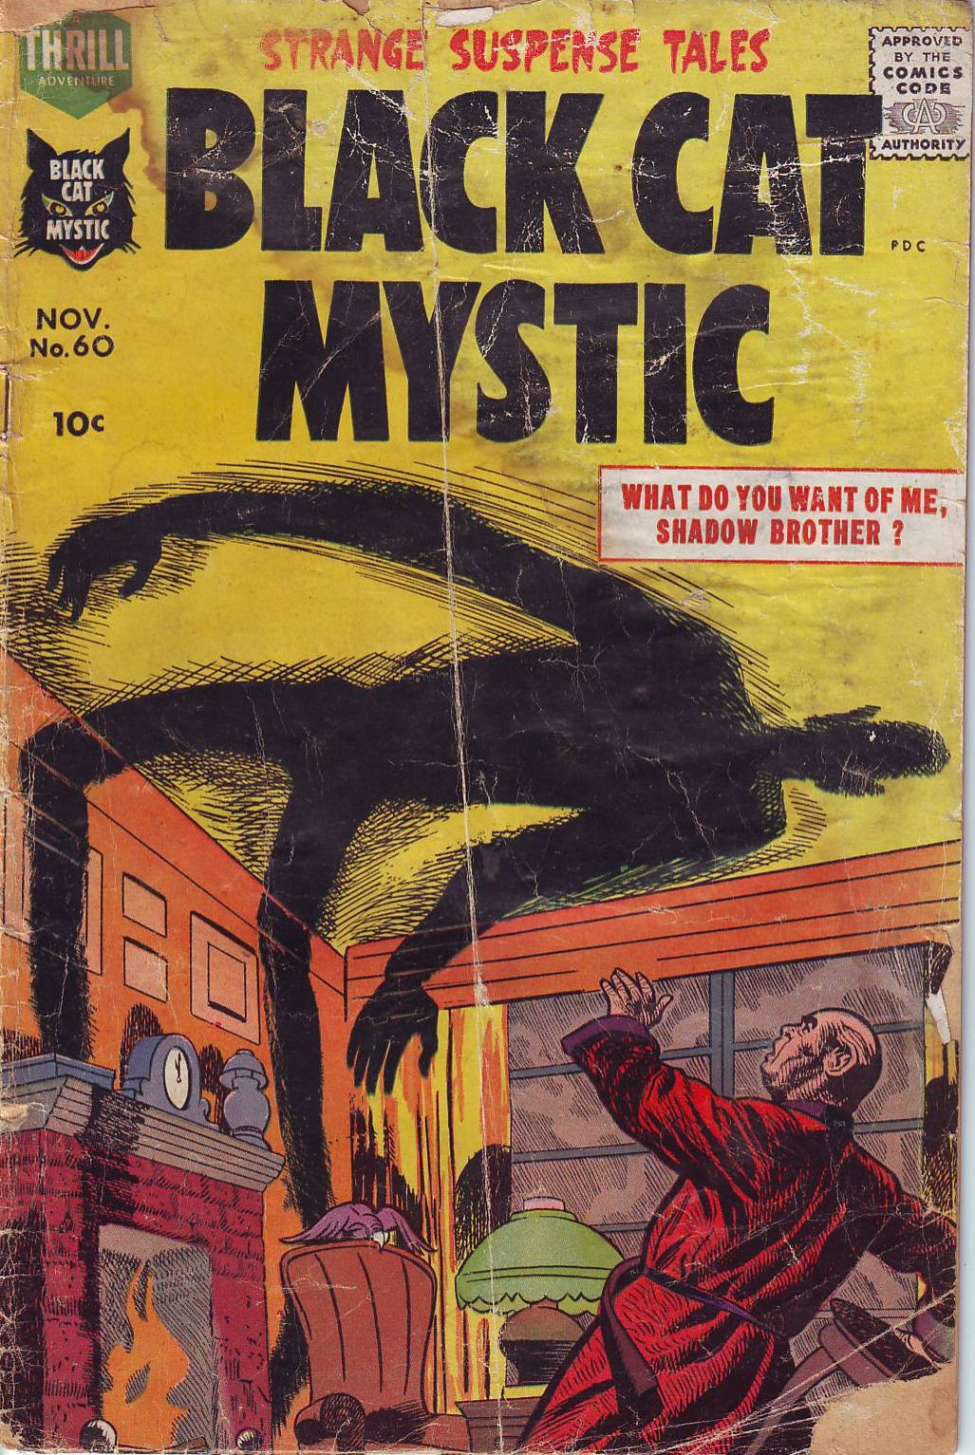 Book Cover For Black Cat 60 (Mystic)